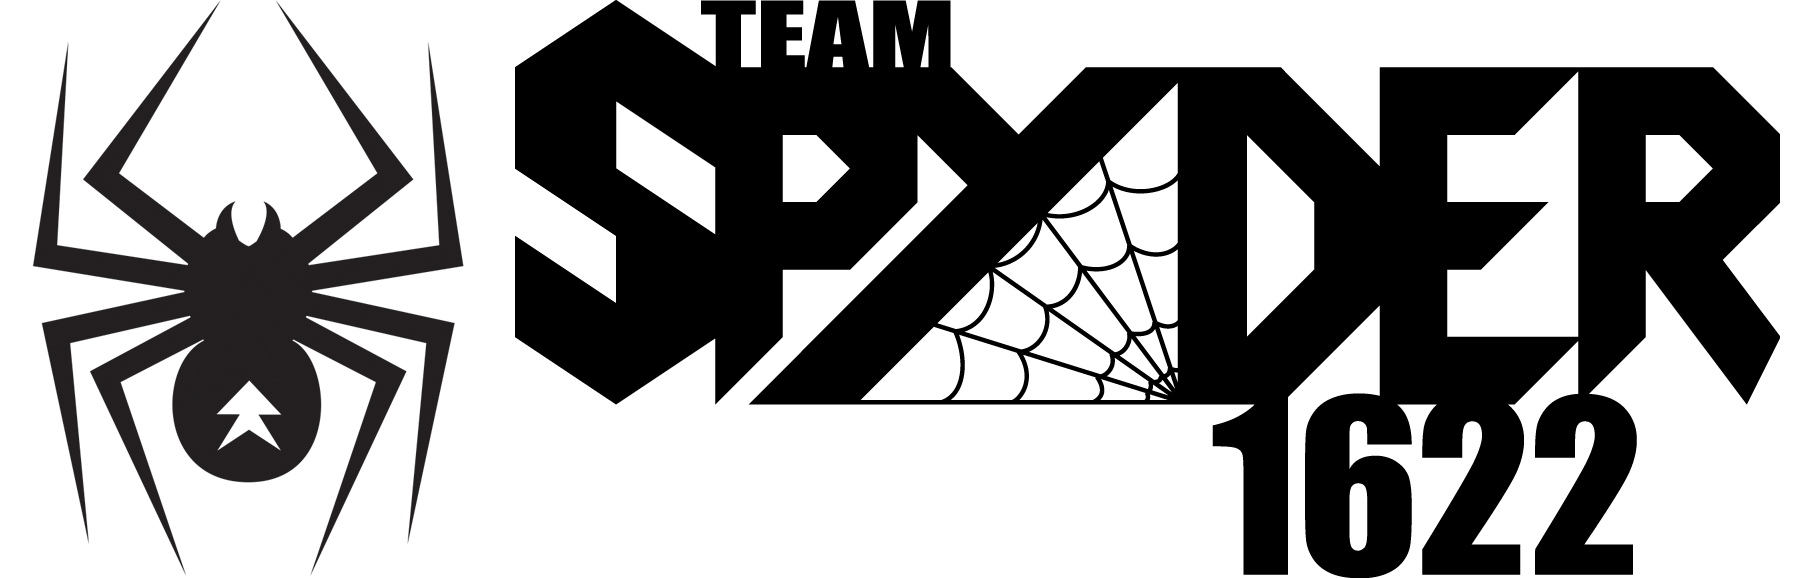 Spyder Logo - Team Spyder 1622 - Home